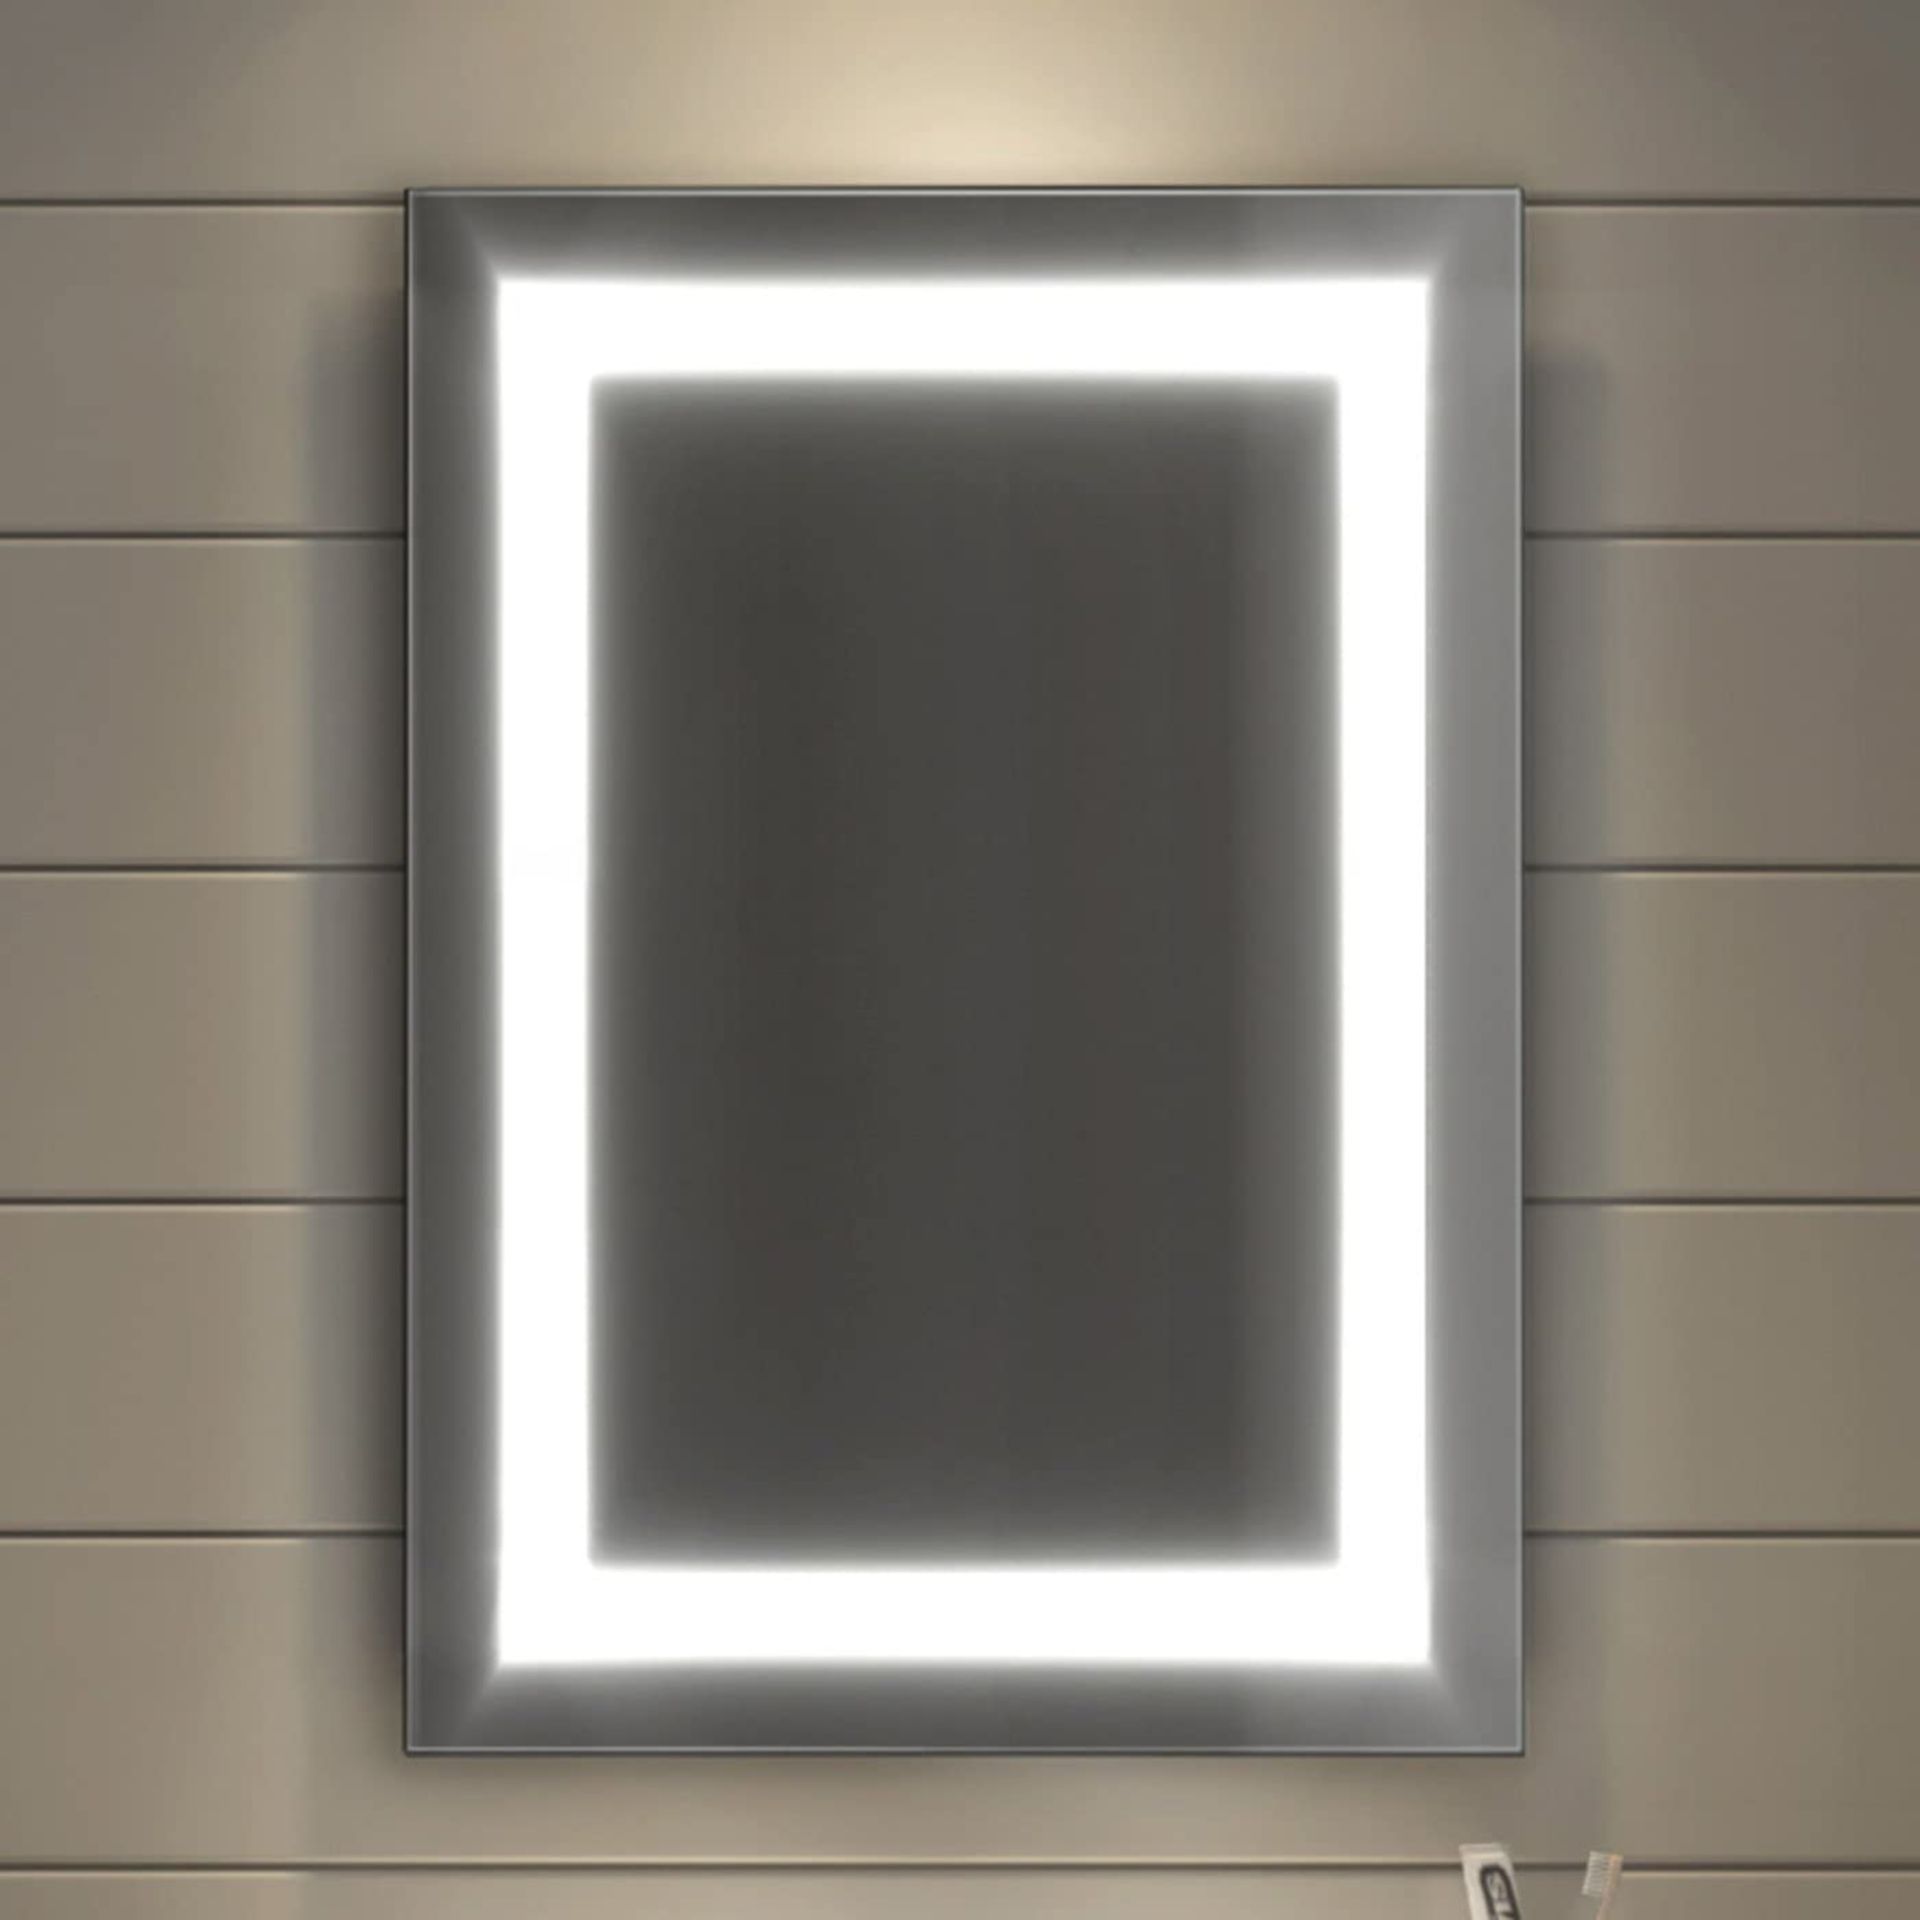 NEW 500x700mm Modern Illuminated Backlit LED Light Bathroom Mirror + Demister Pad. RRP £599.99. - Image 2 of 3